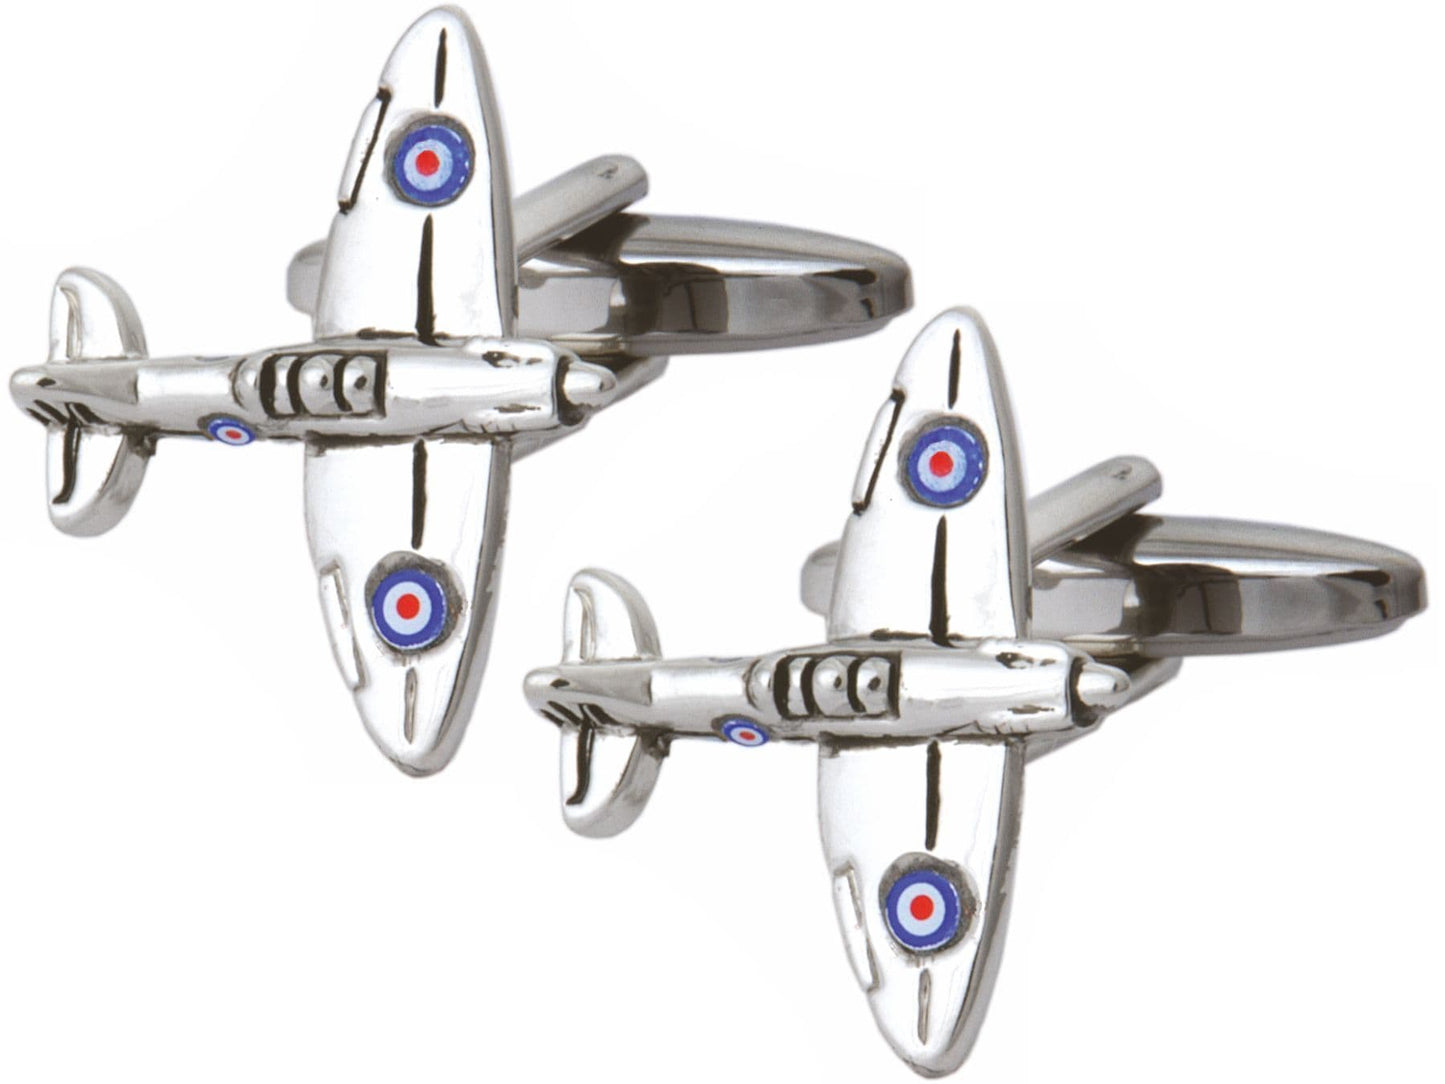 RAF spitfire aircraft plane cufflinks silver plated